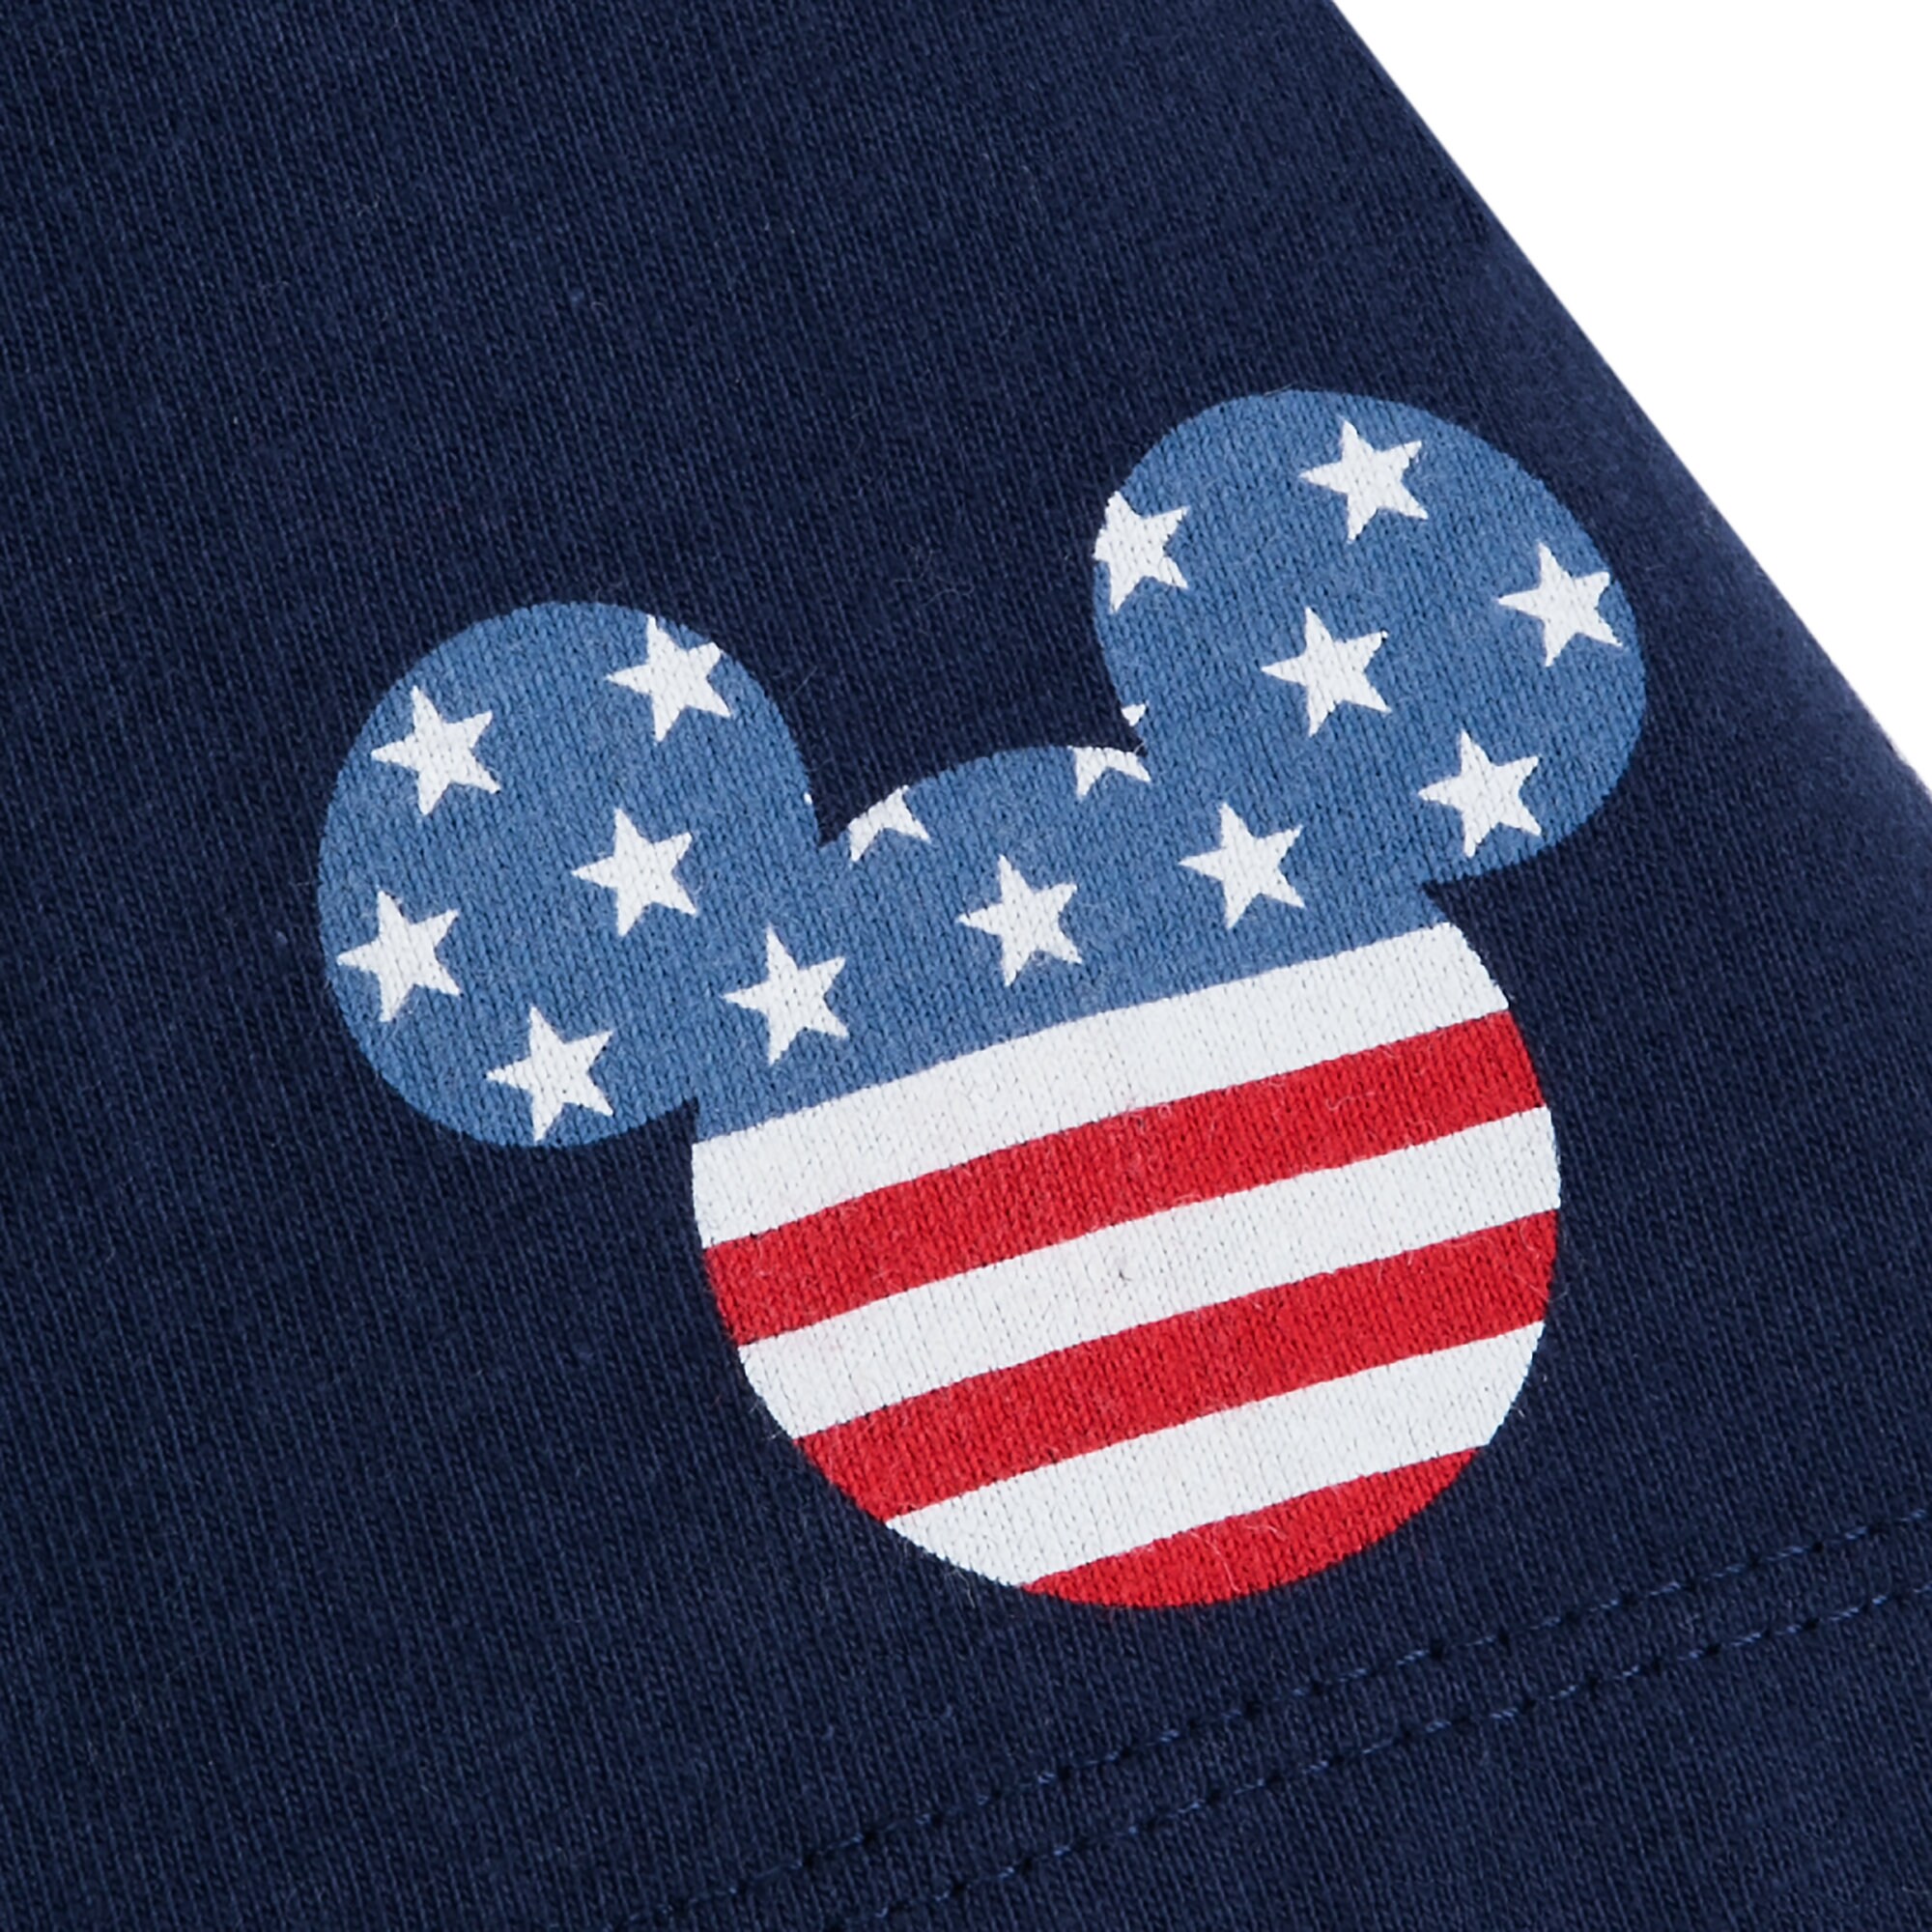 Mickey Mouse Americana Pocket T-Shirt for Men - Walt Disney World